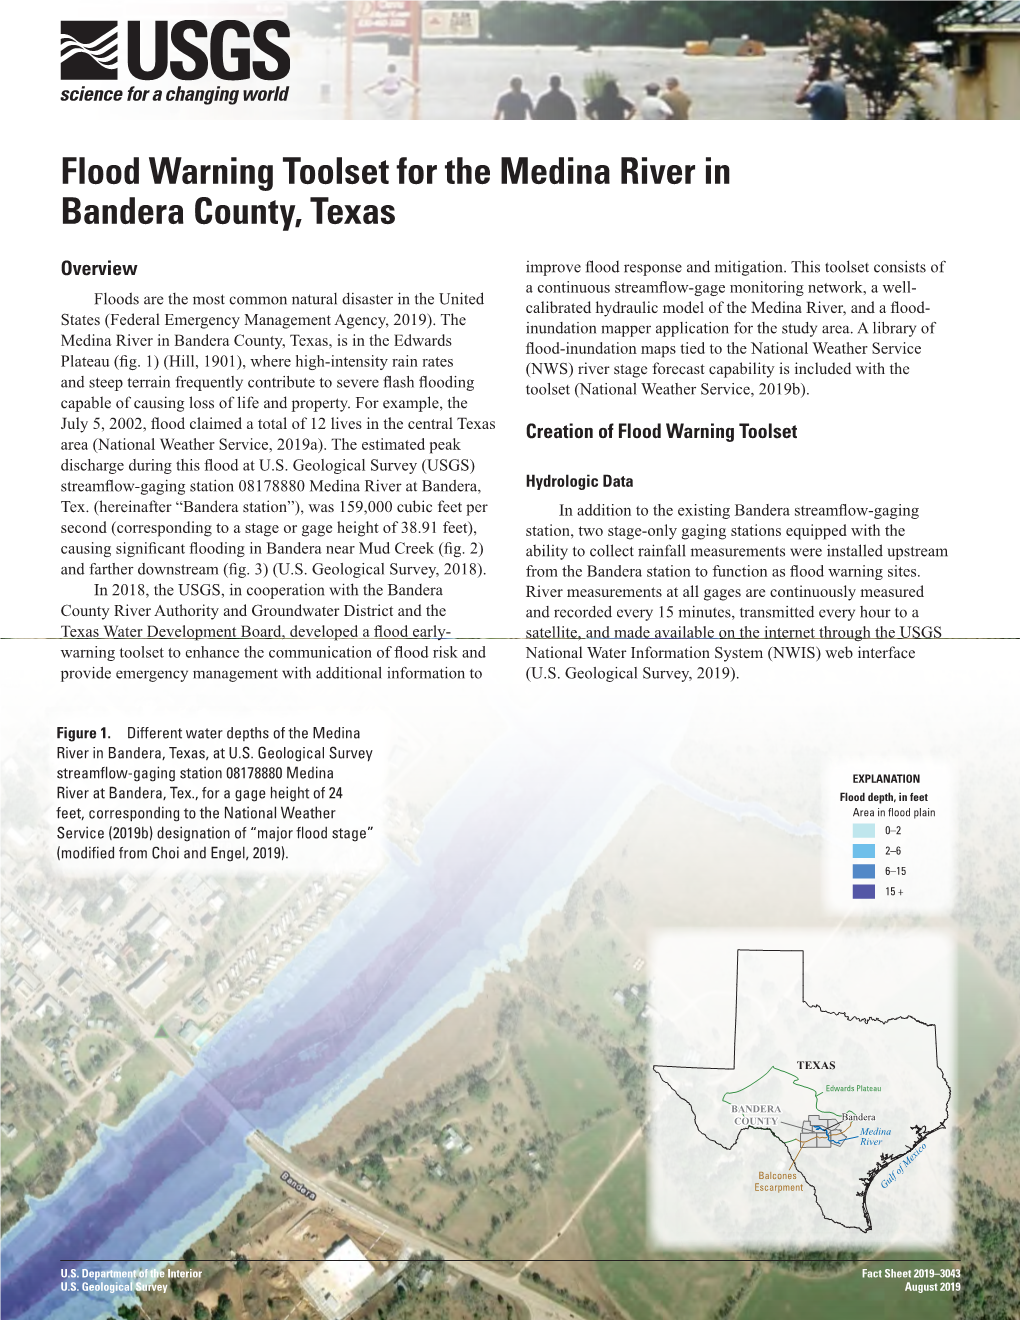 Flood Warning Toolset for the Medina River in Bandera County, Texas